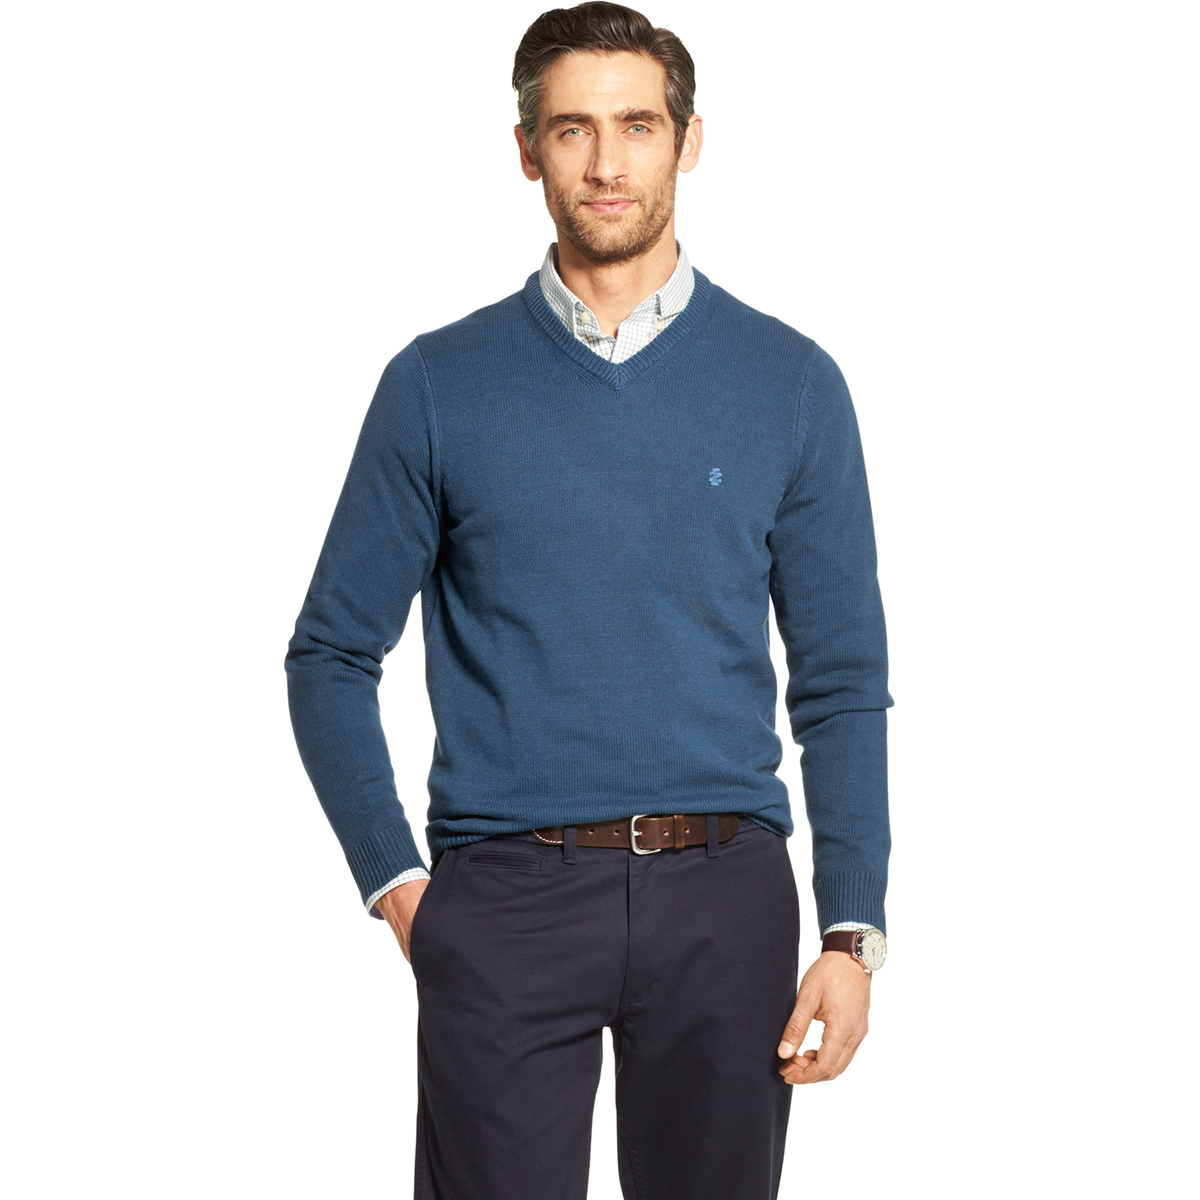 Izod Men's Premium Essentials Long-Sleeve V-Neck Sweater - Blue, M